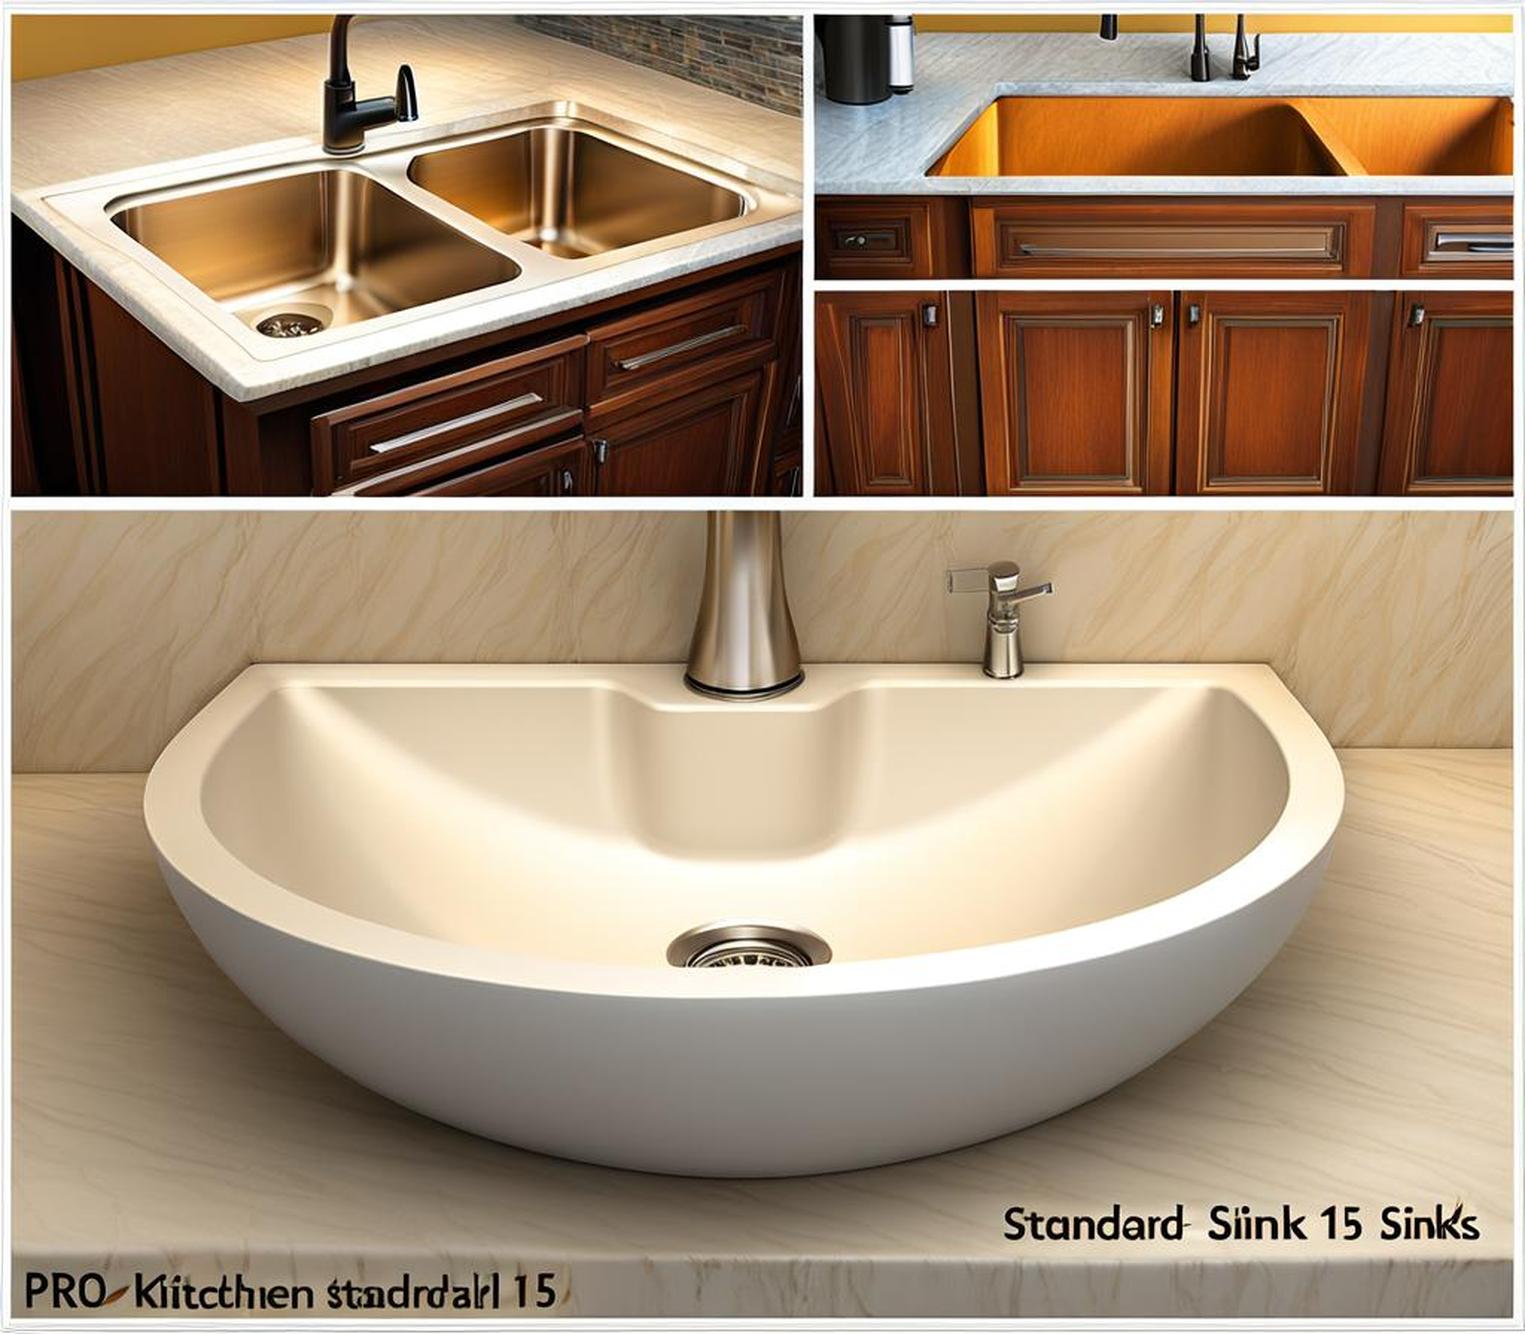 are kitchen sinks standard size